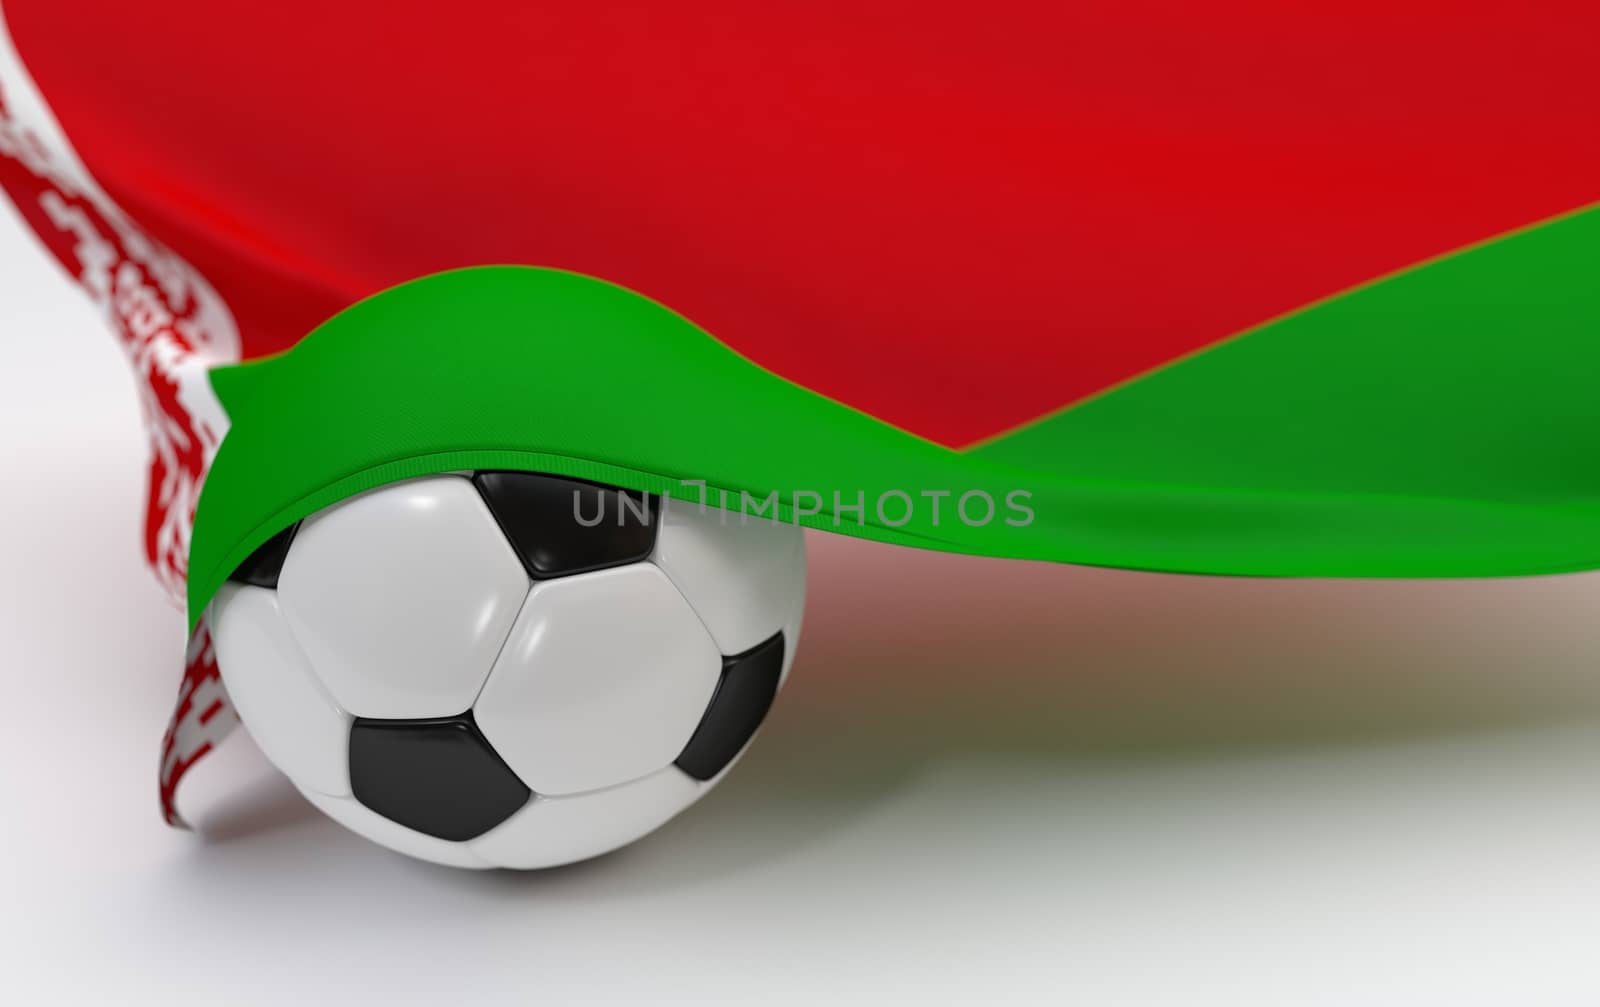 Belarus flag and soccer ball on white backgrounds